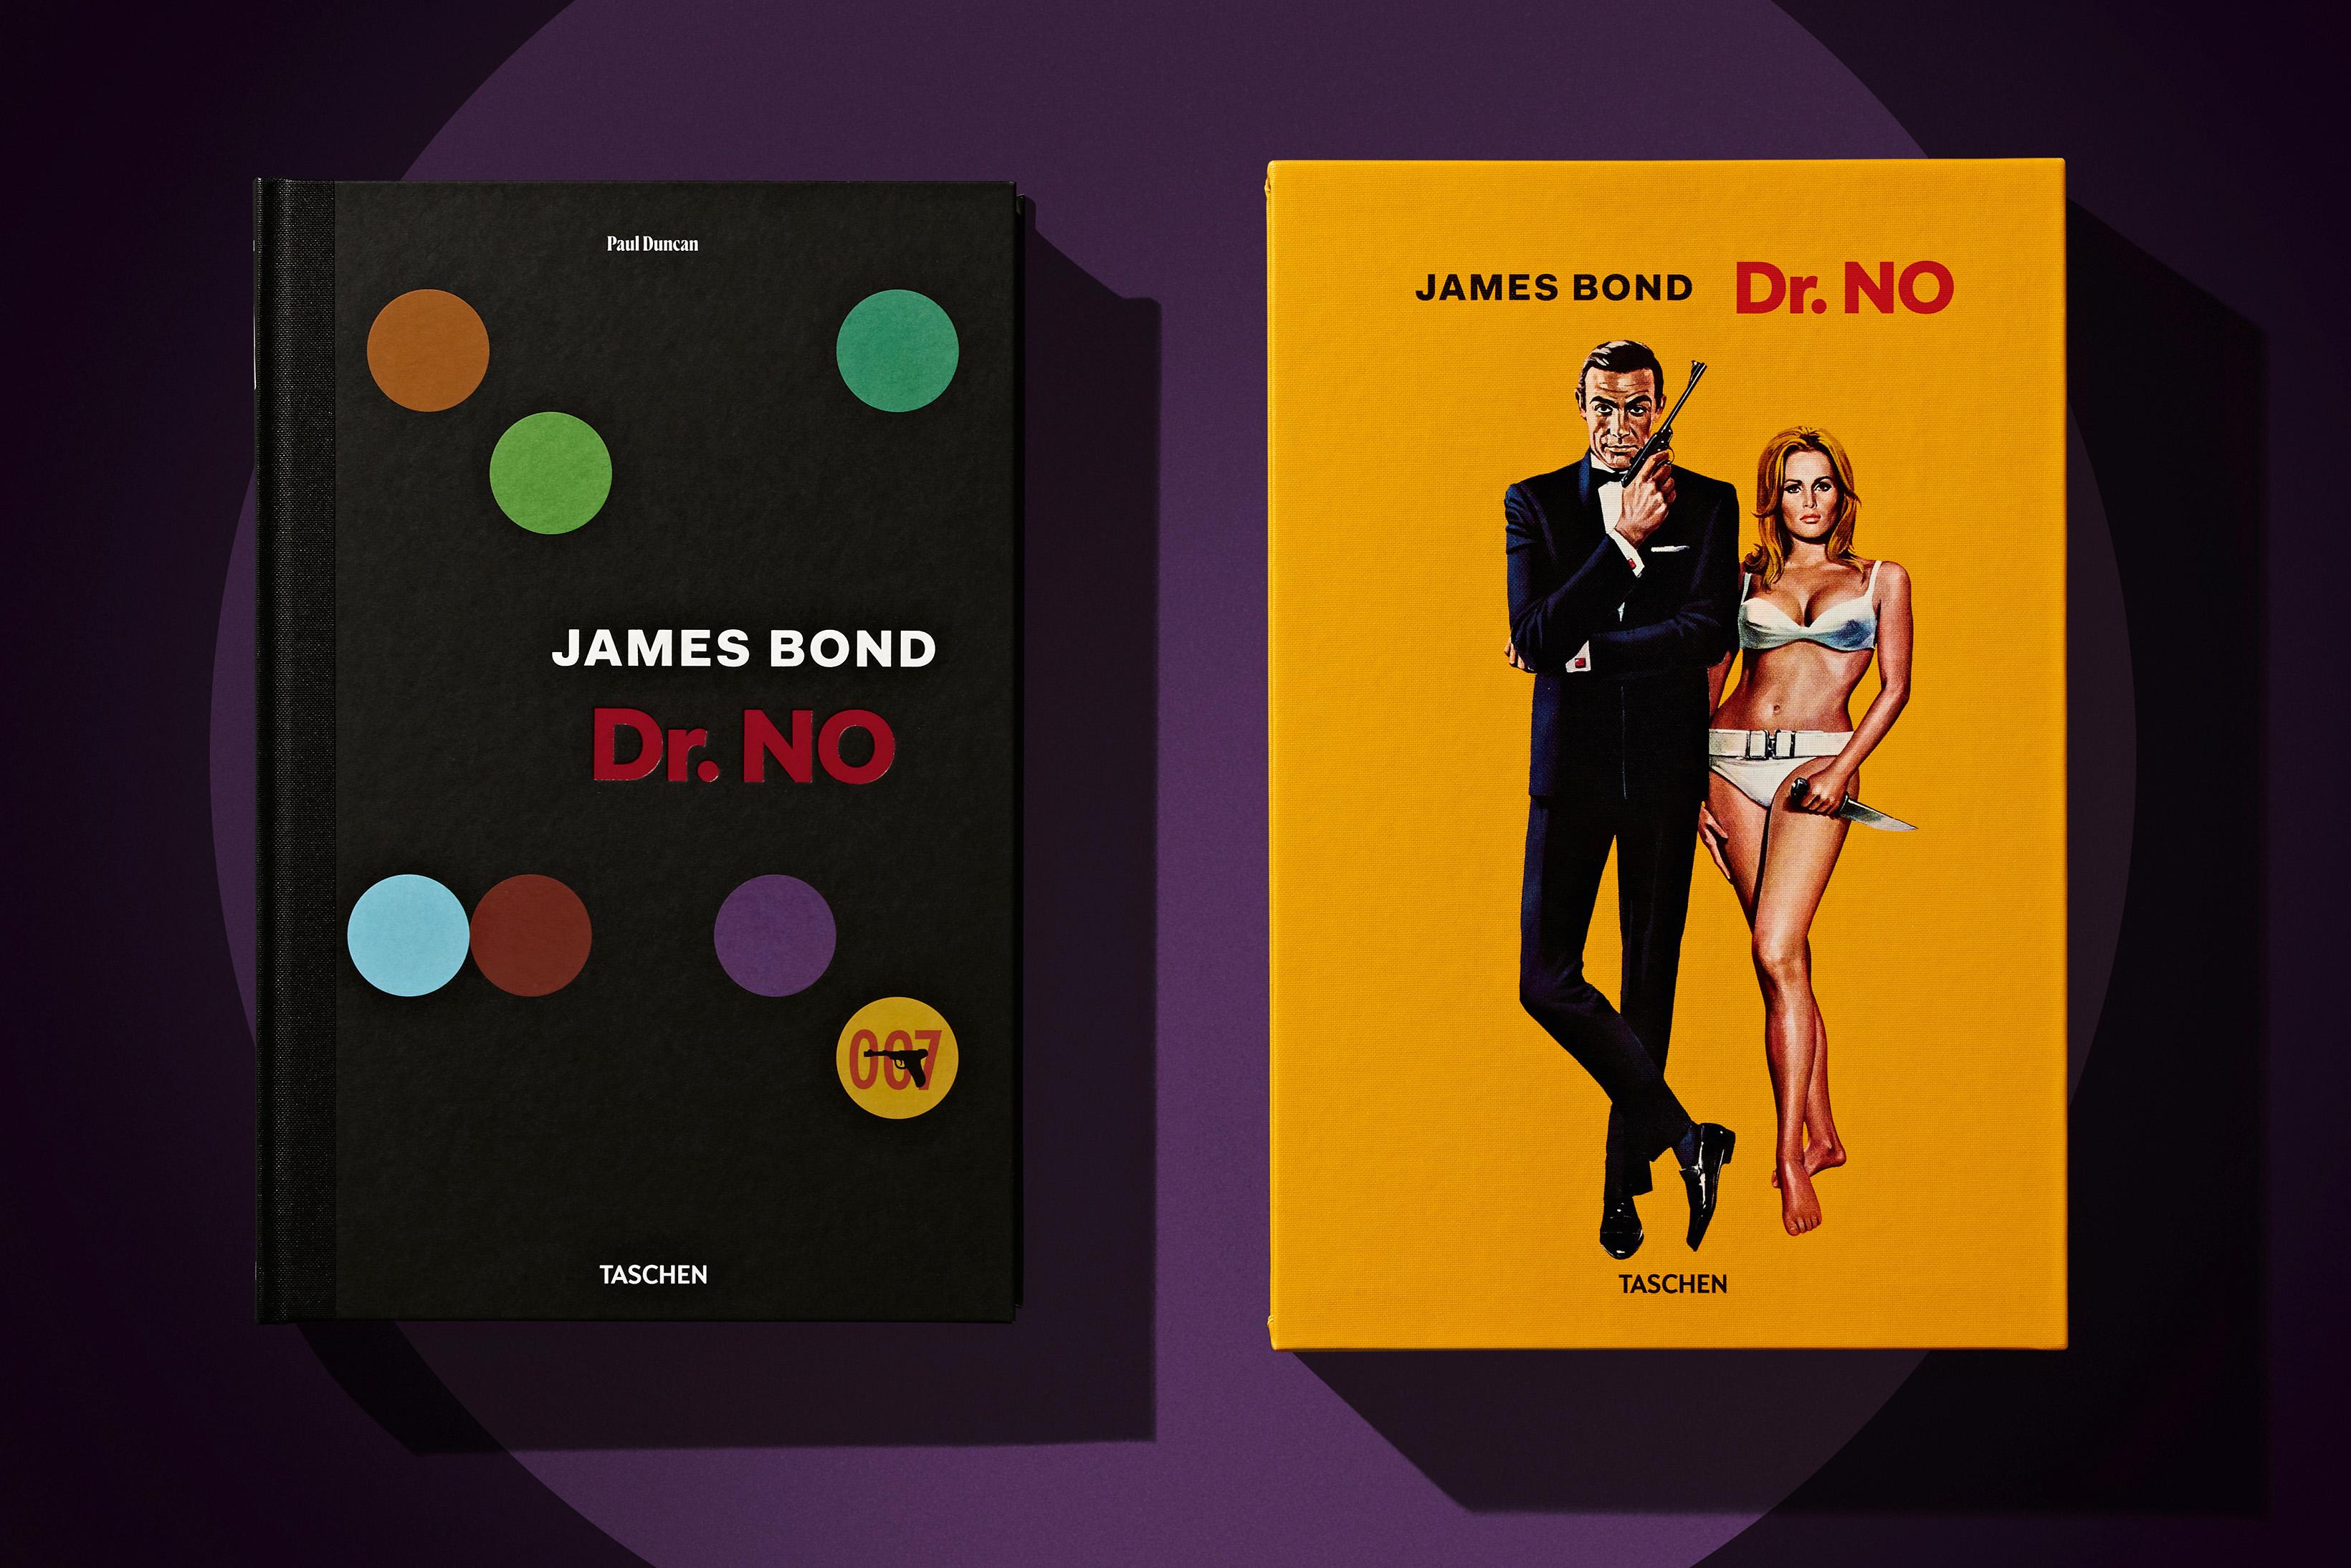 James Bond. Dr. No. ‘Bond, James Bond’, 1962. Limited Ed ChromaLuxe Print & Book For Sale 4